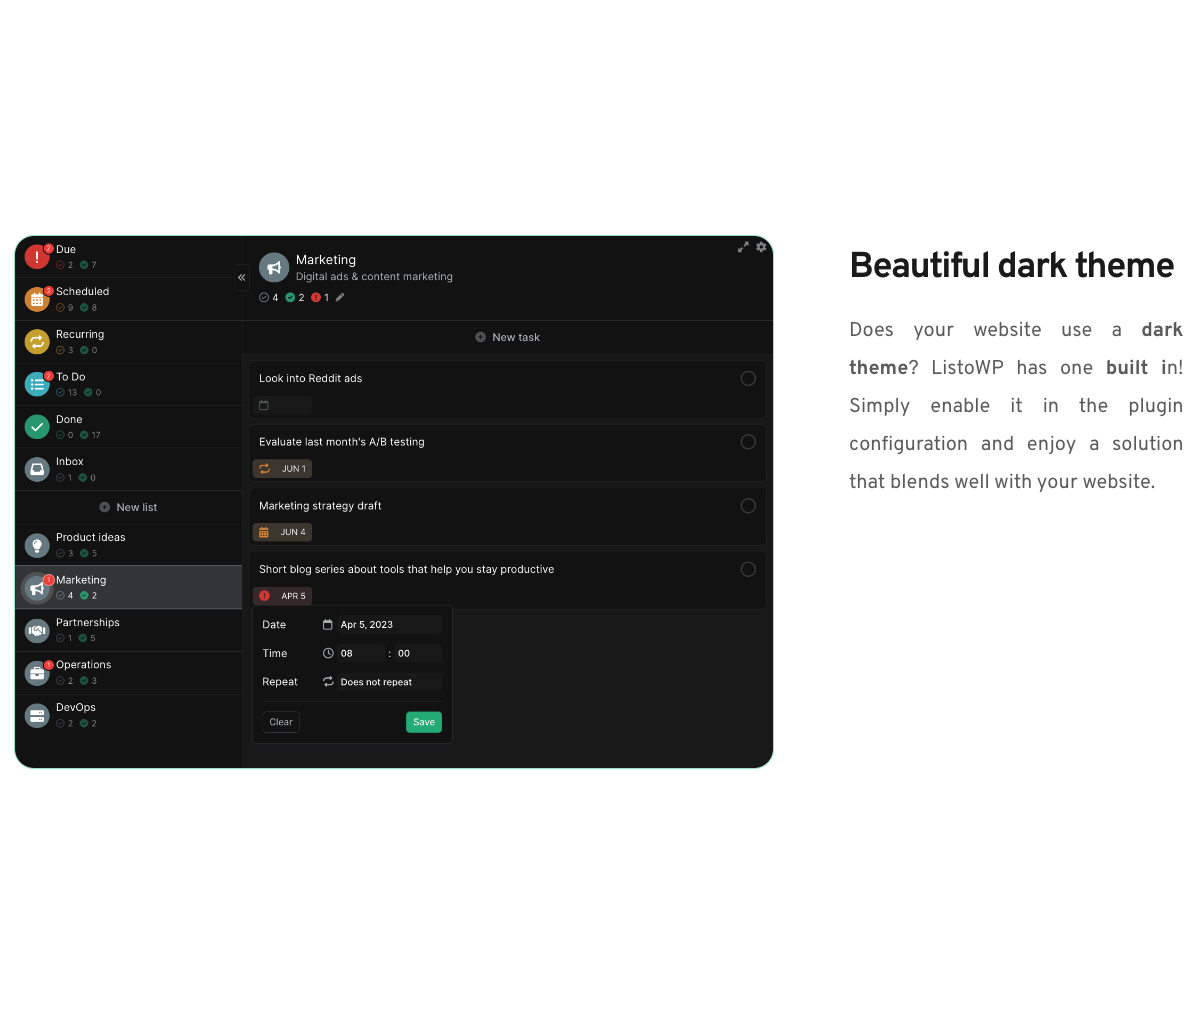 Dark mode for websites using a dark theme